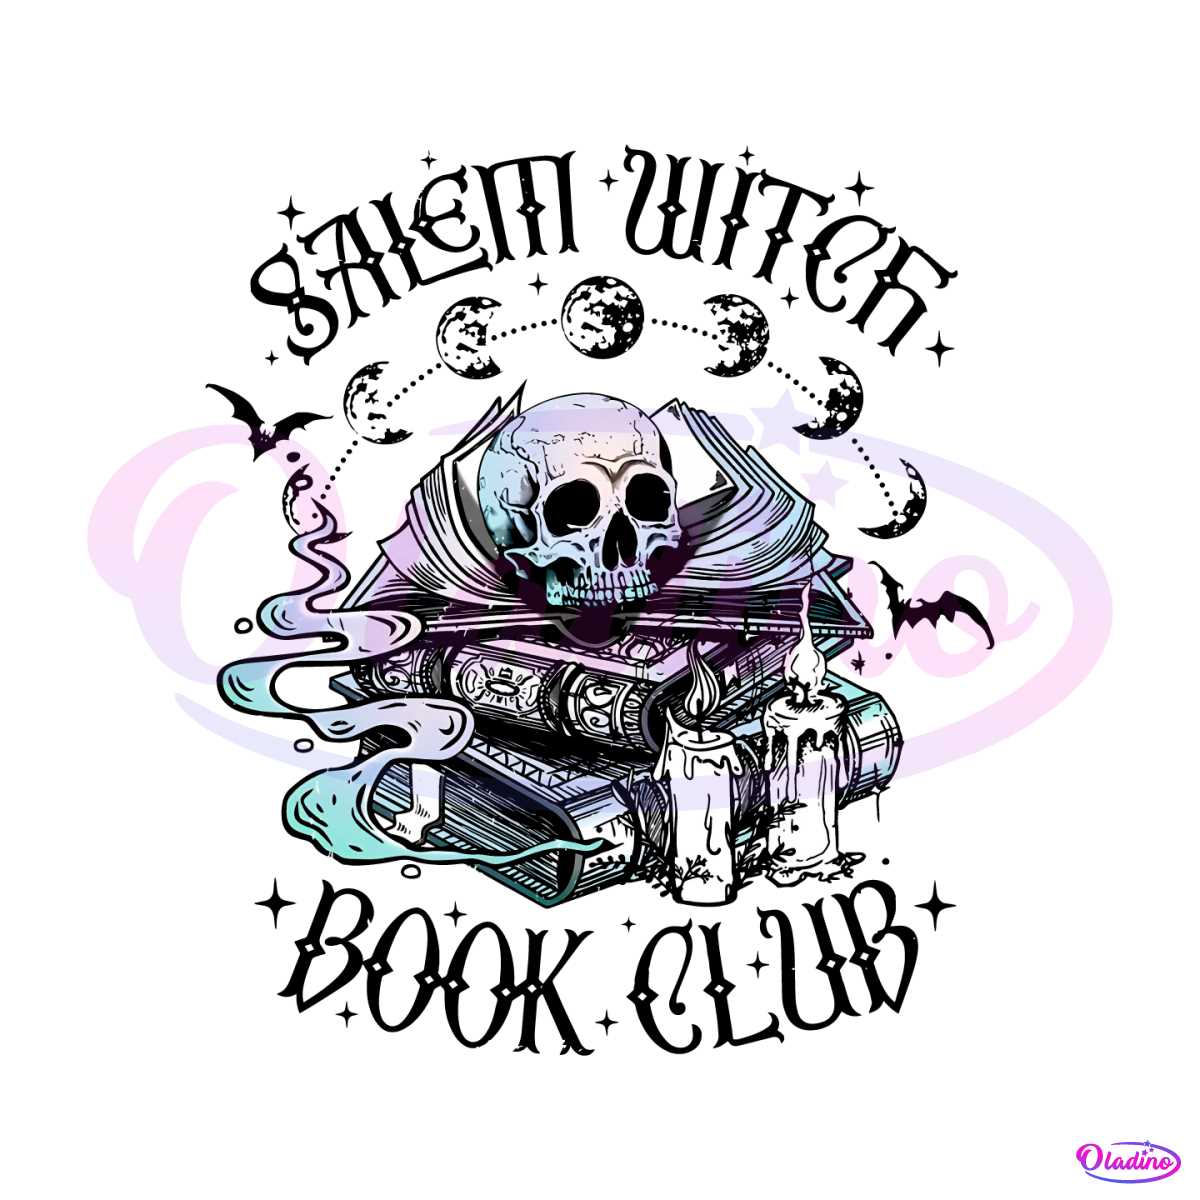 salem-witch-book-club-salem-massachusetts-png-download